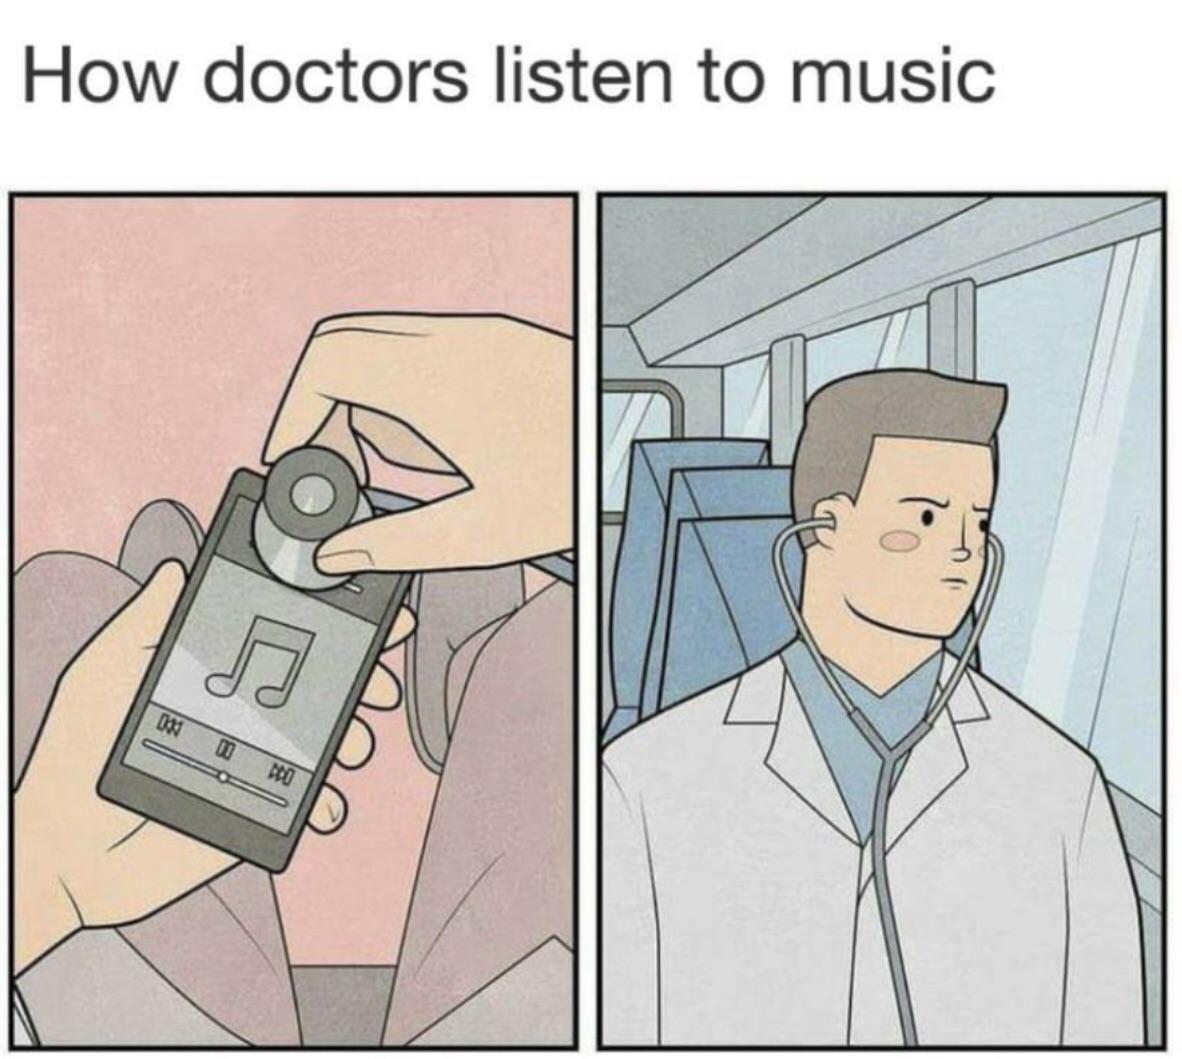 doctors listen to music - How doctors listen to music 09 Do